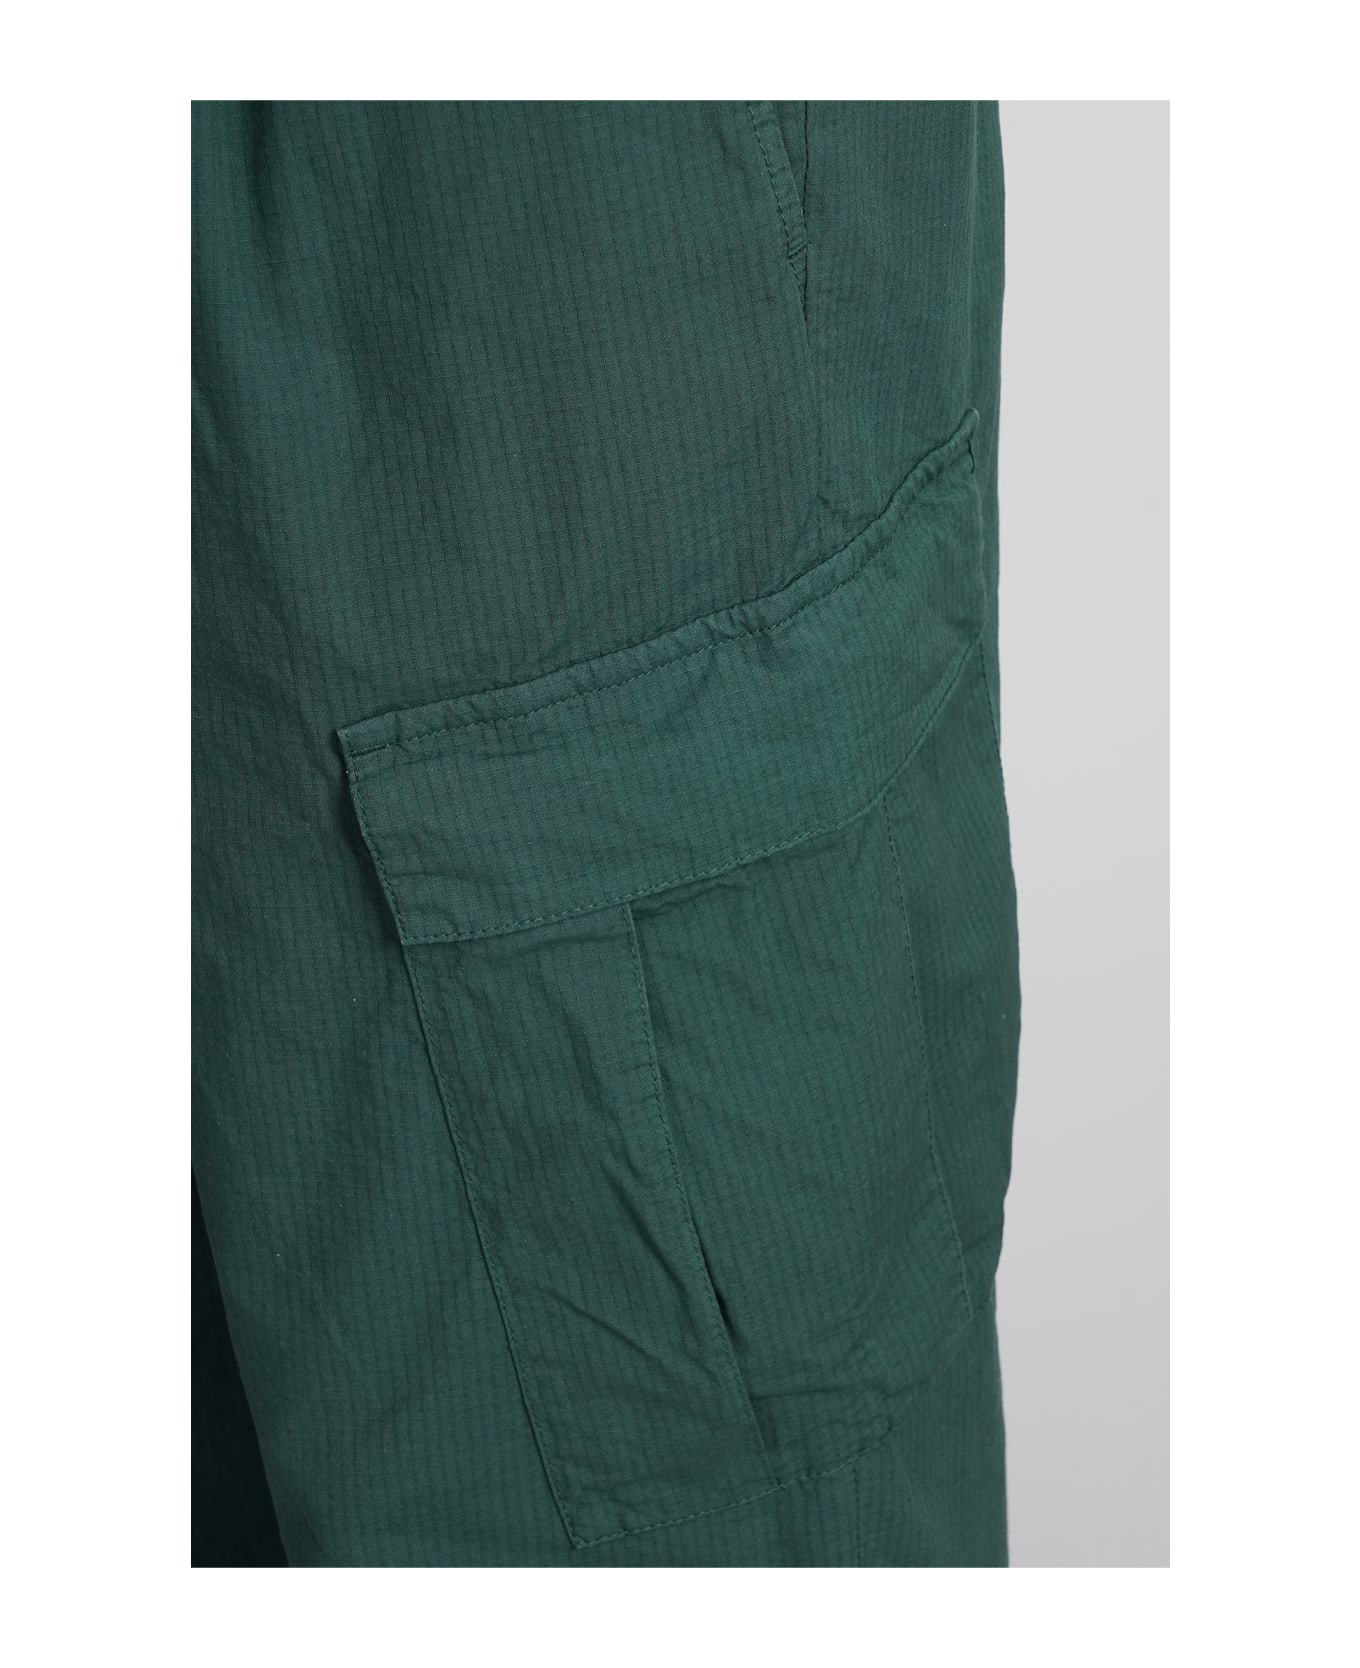 Barena Rambagio Pants In Green Cotton - green